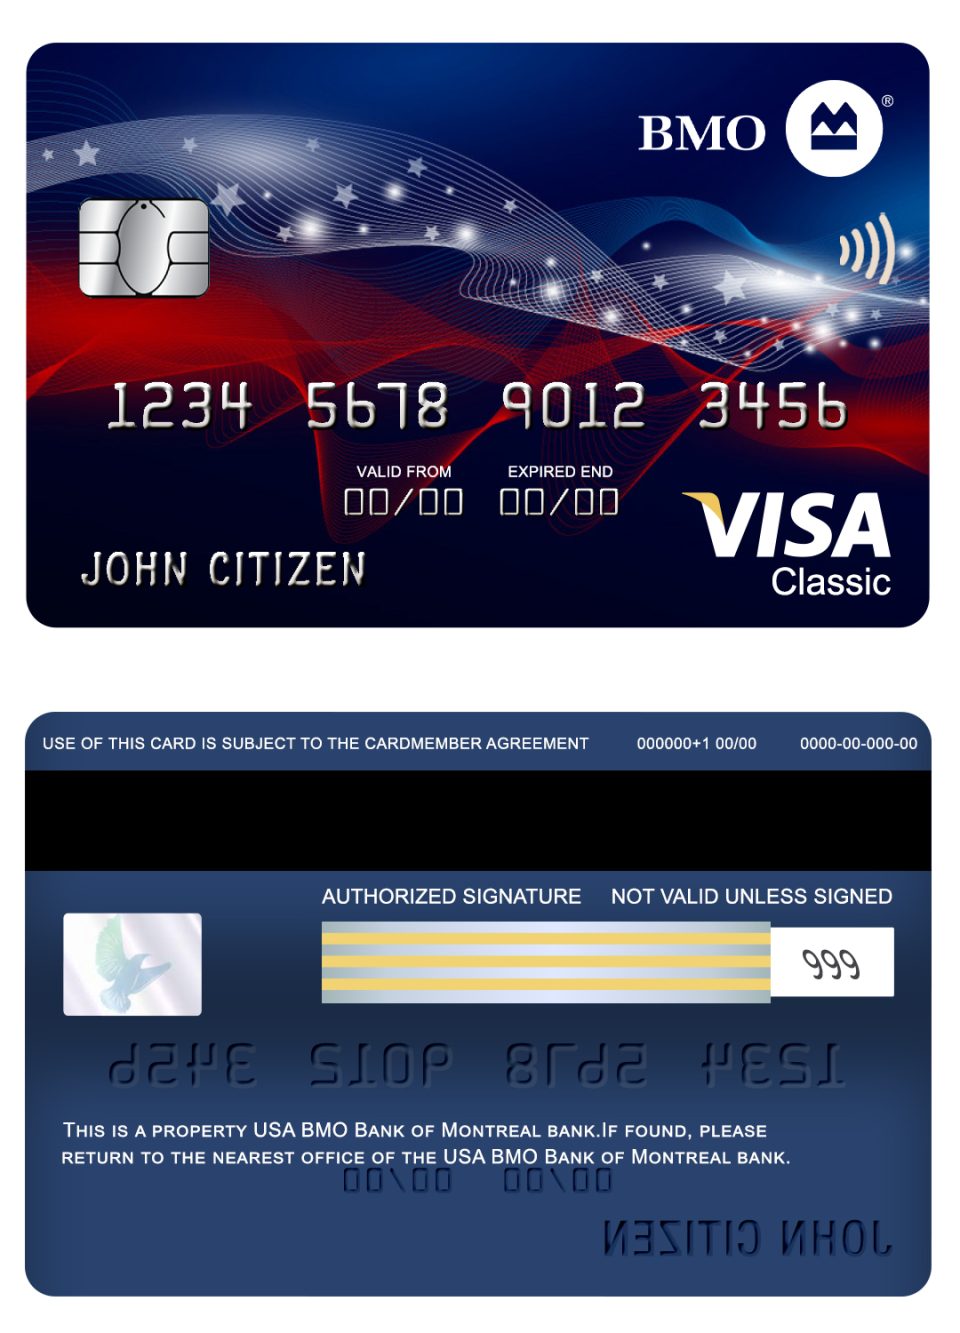 Fillable USA BMO Bank of Montreal bank visa classic card Templates | Layer-Based PSD